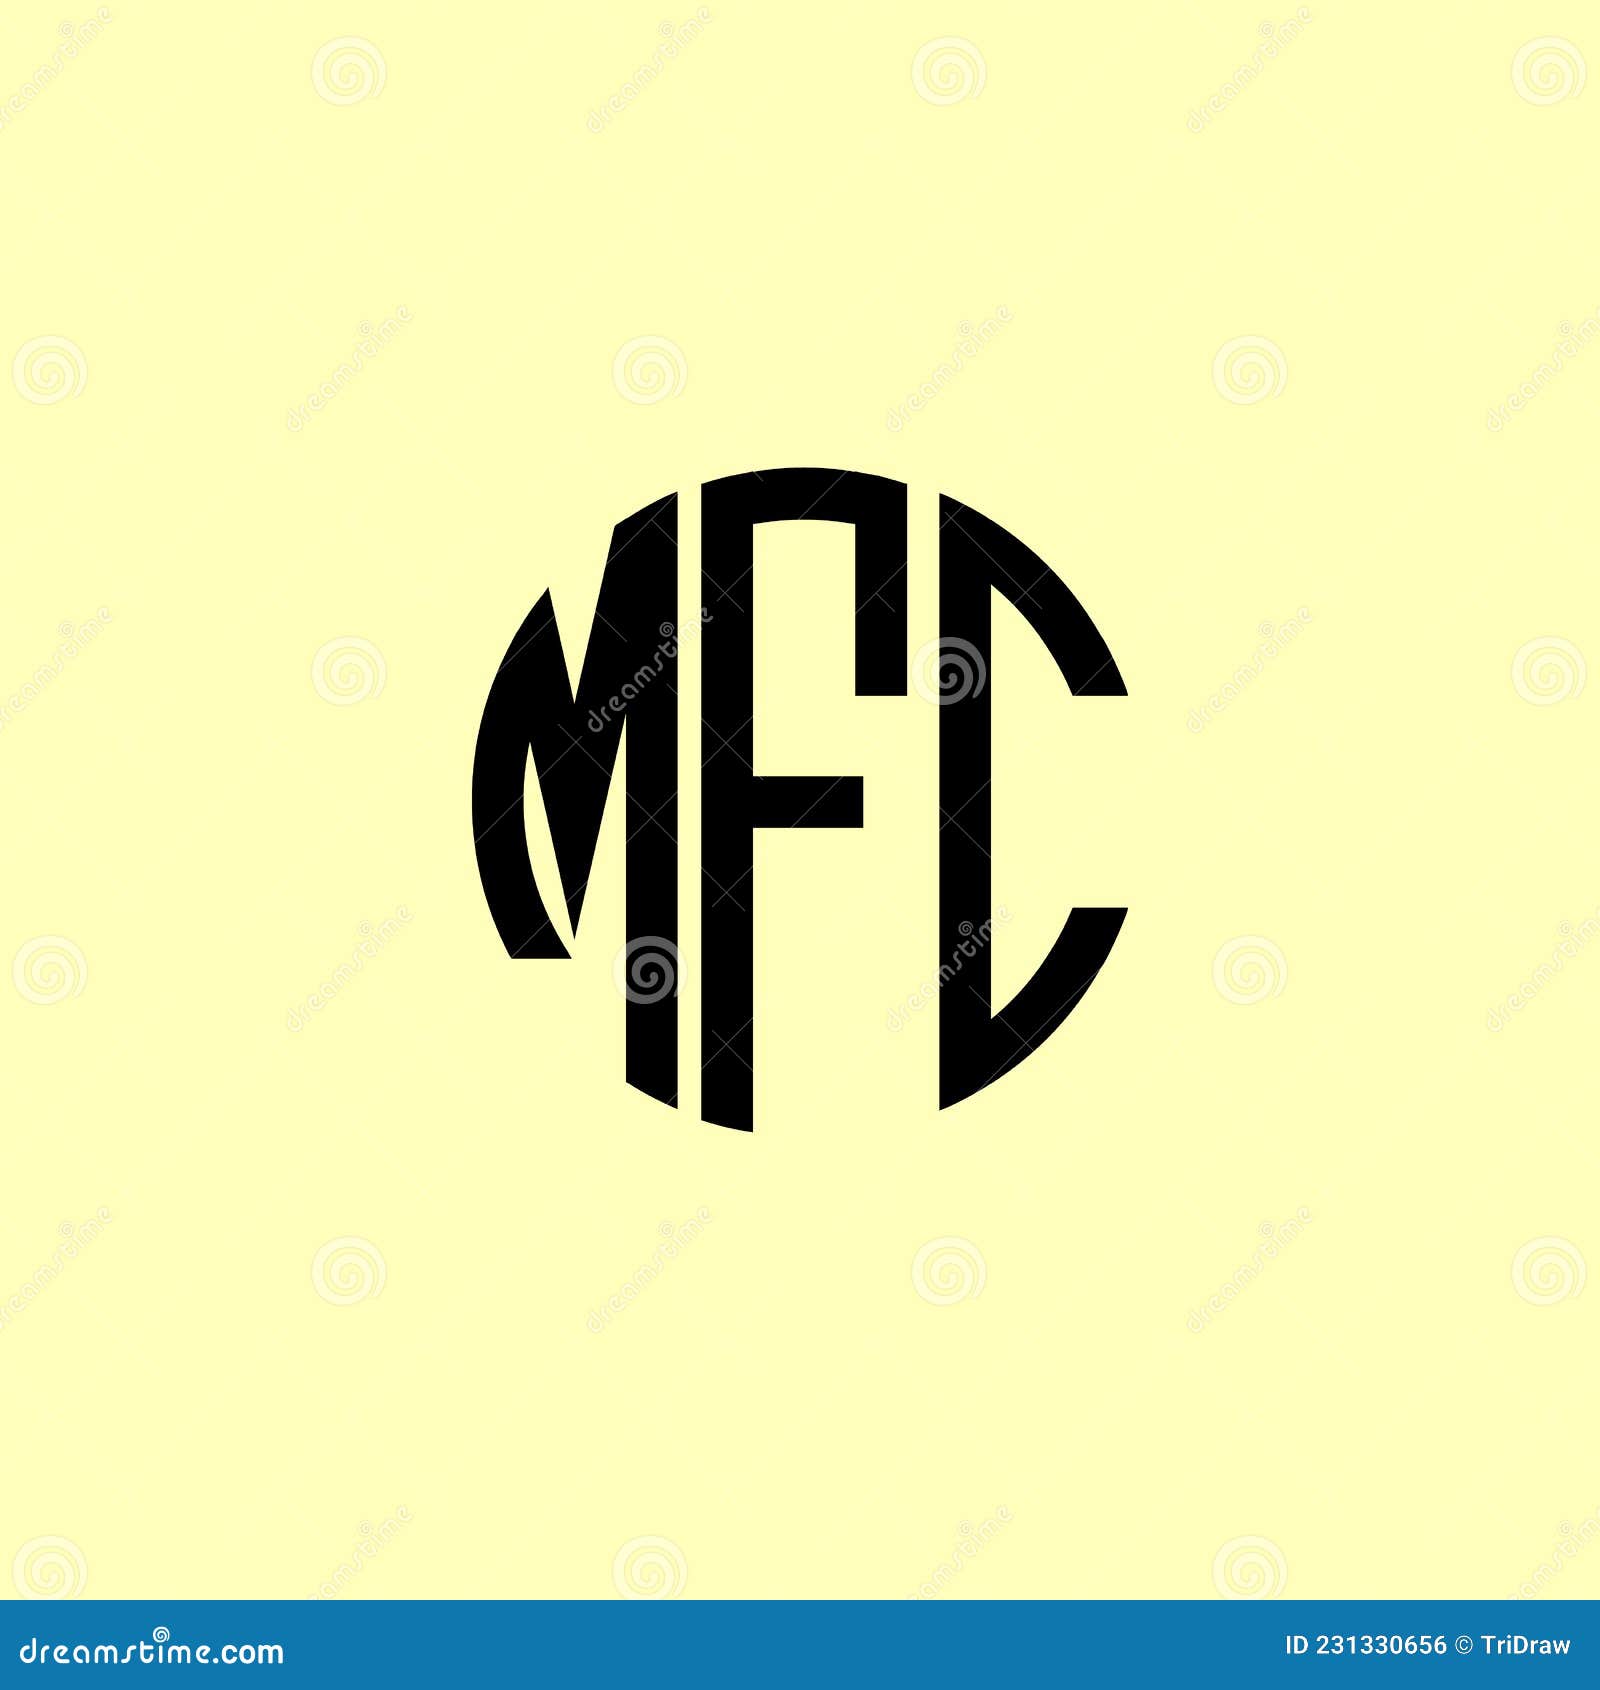 MFC Digital Account - Middlesbrough FC